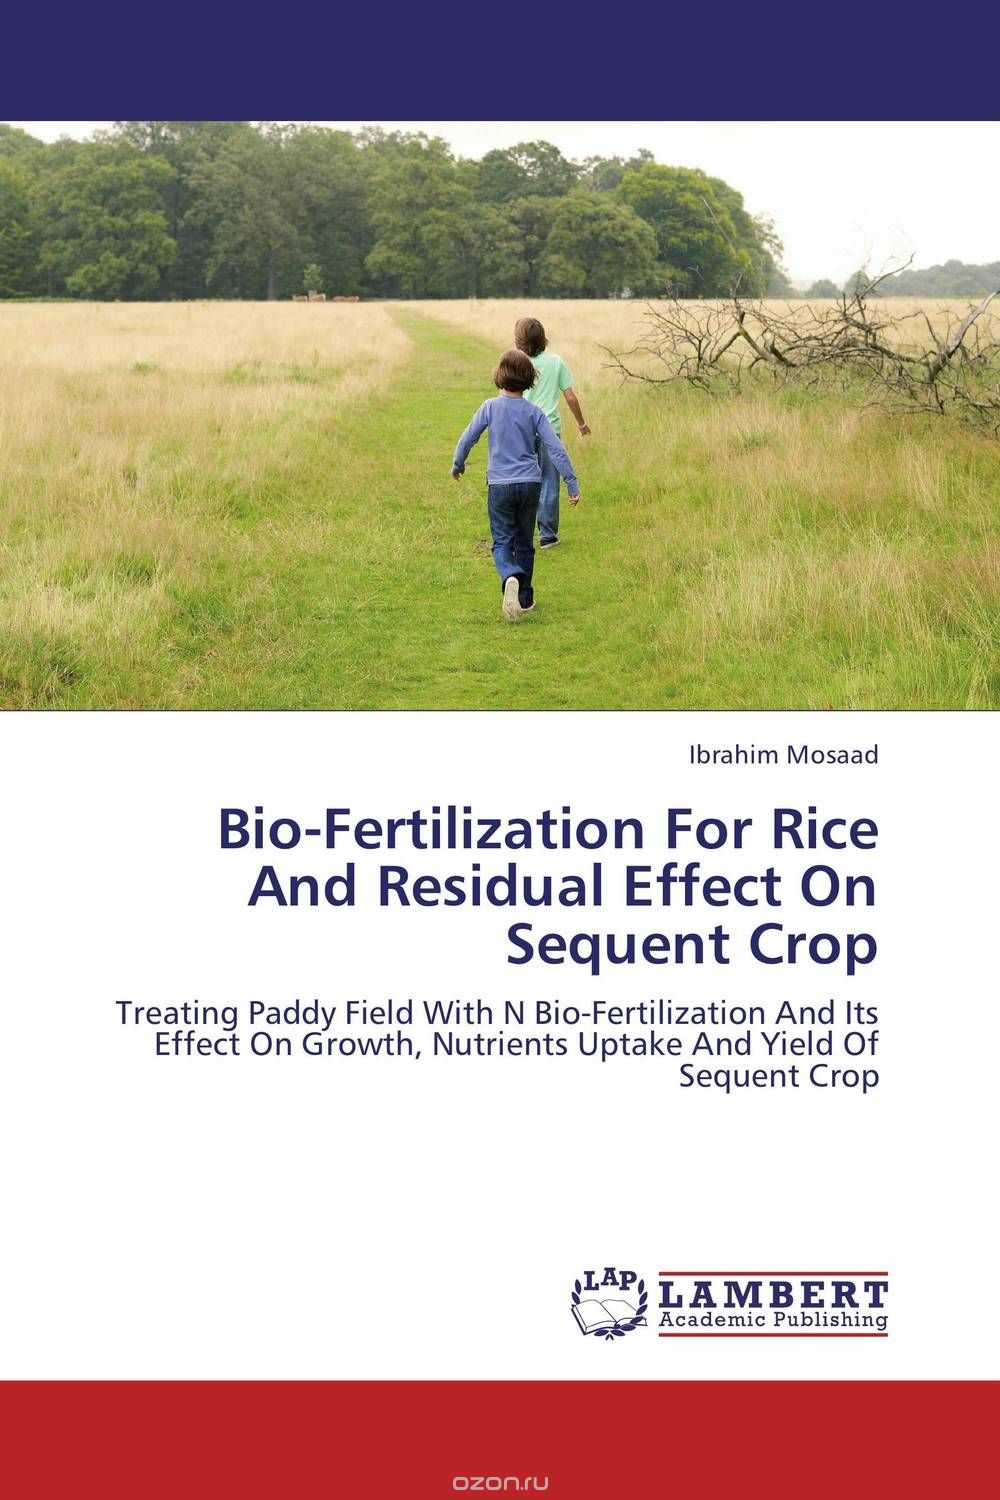 Скачать книгу "Bio-Fertilization For Rice And Residual Effect On Sequent Crop"